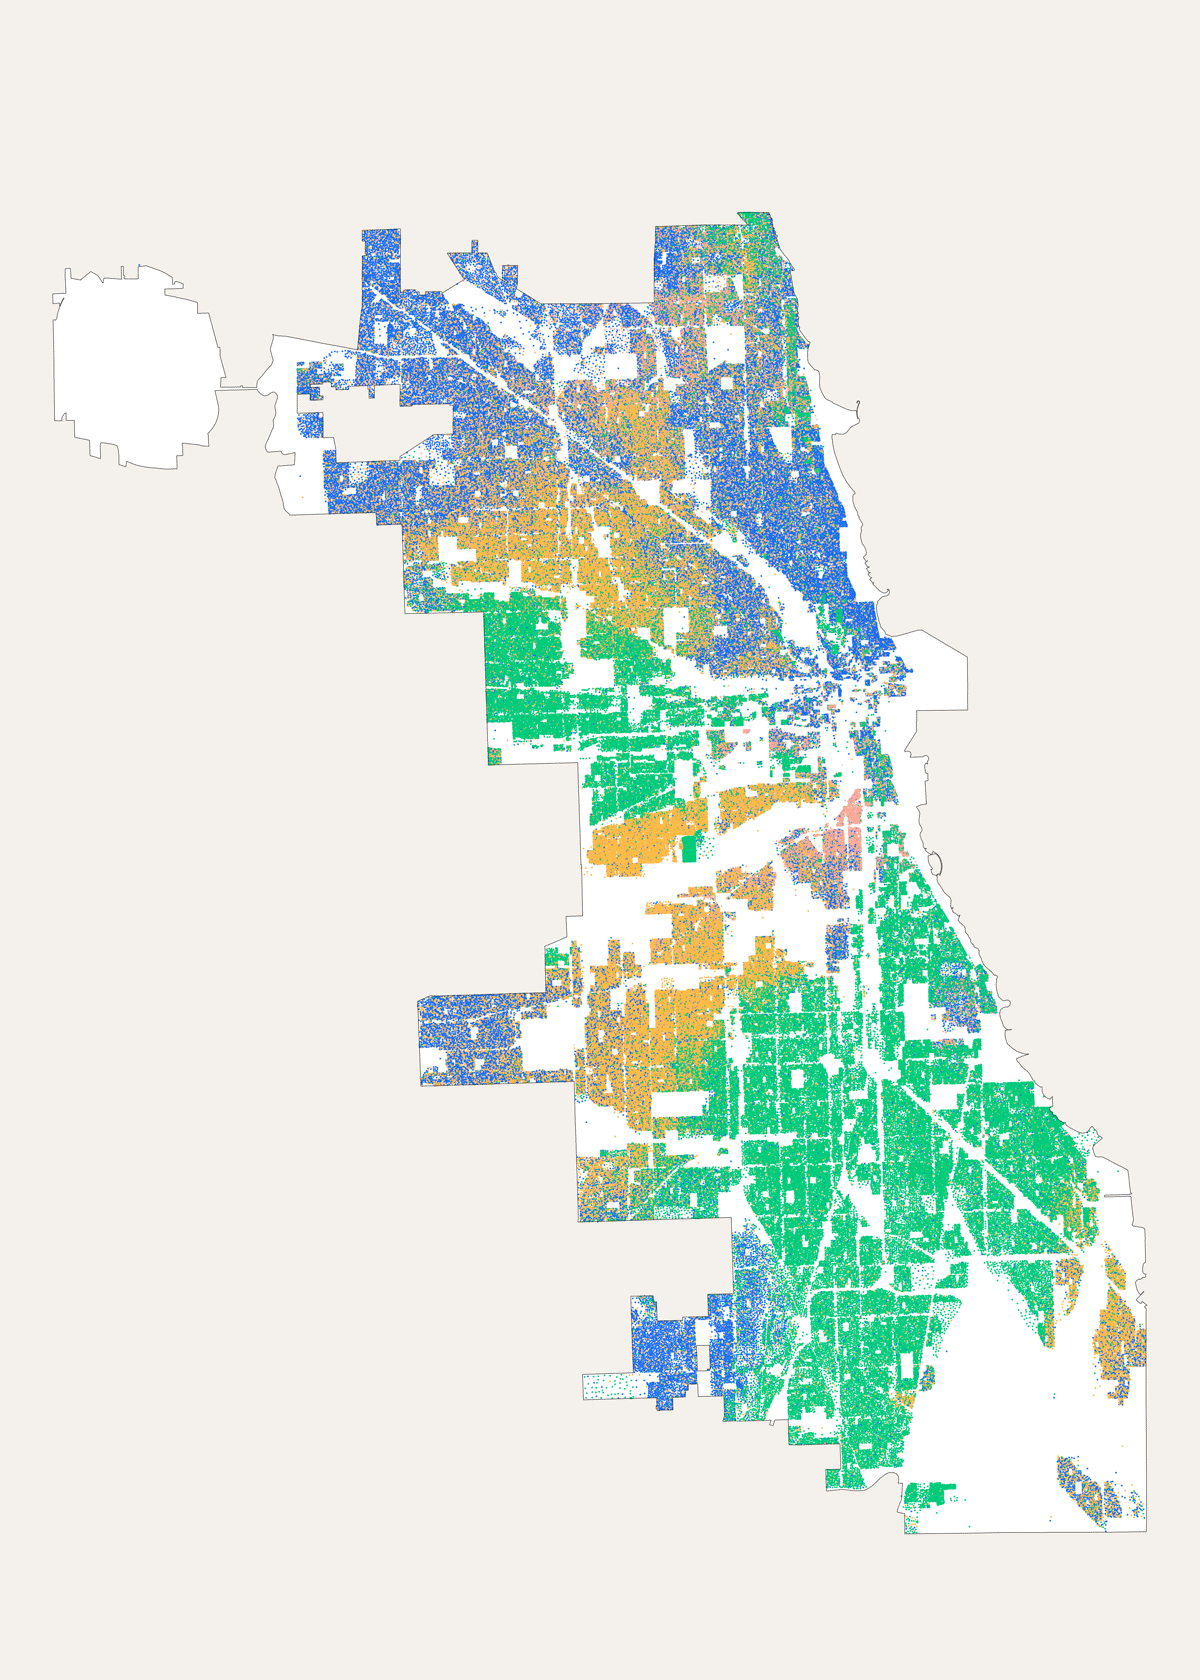 Morphocode Explorer: Chicago Demographics Map